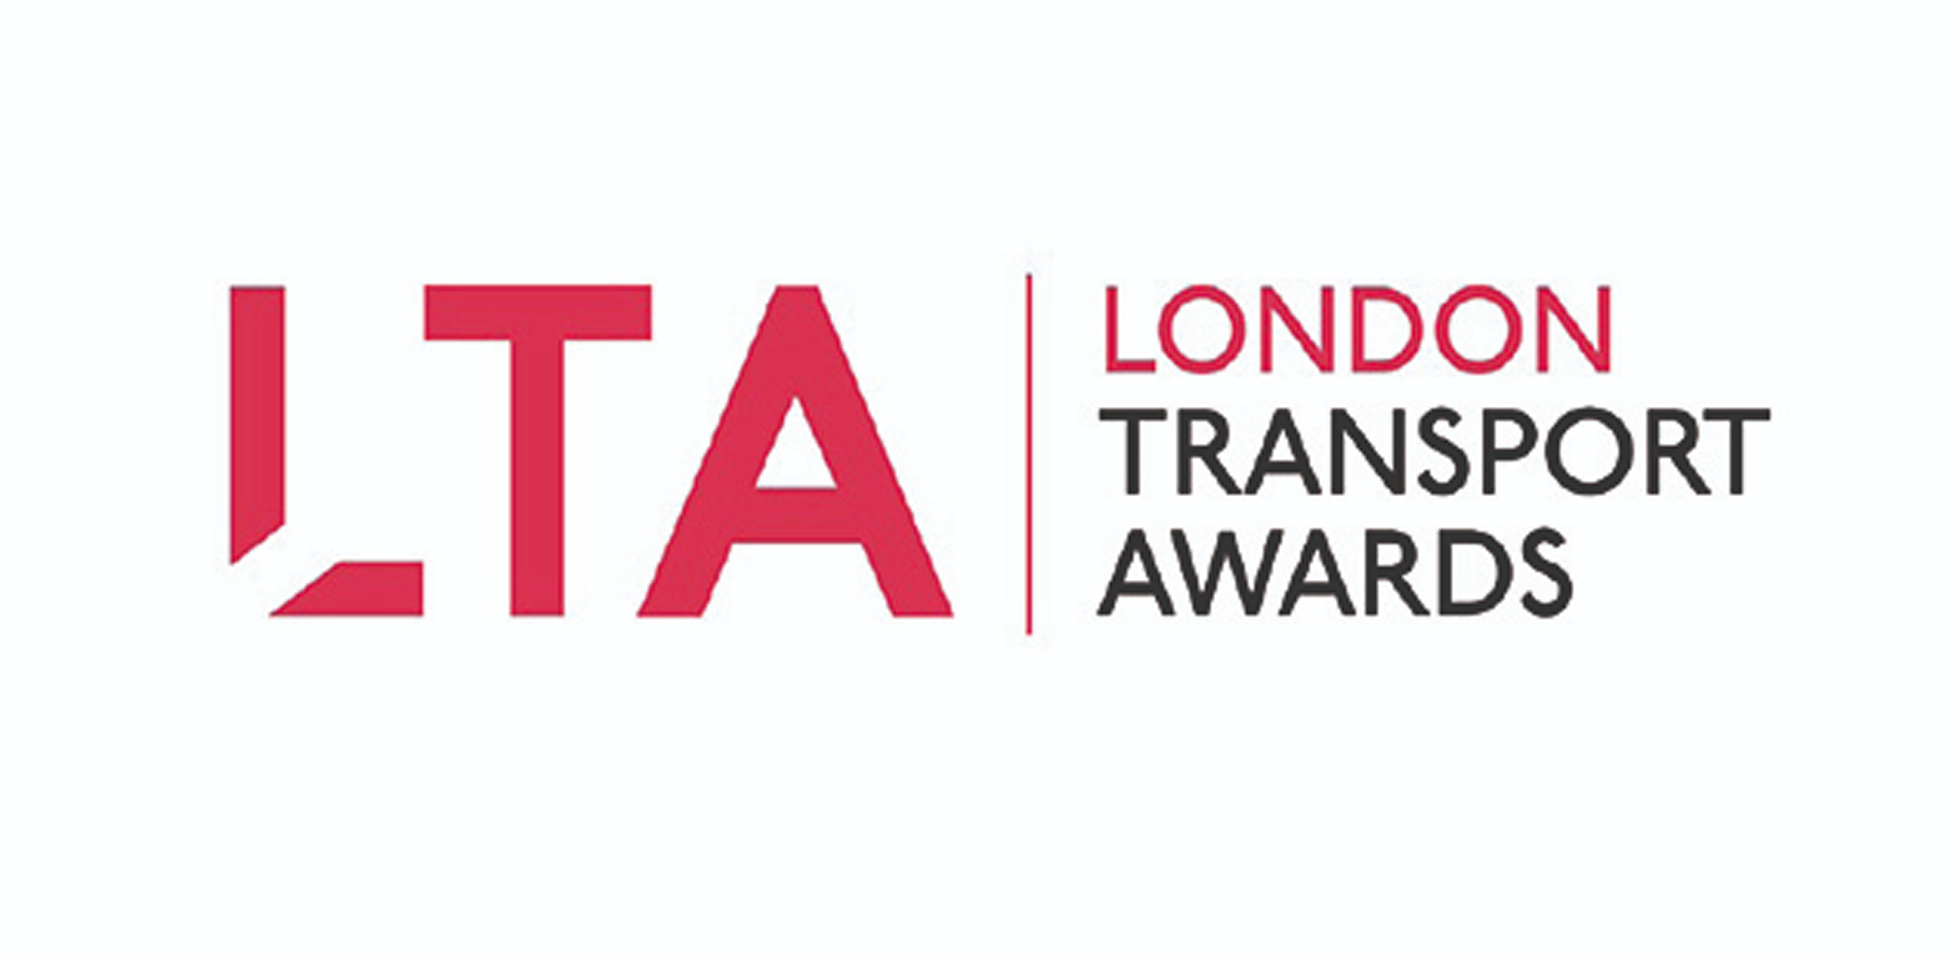 London Transport Awards - Shortlisted